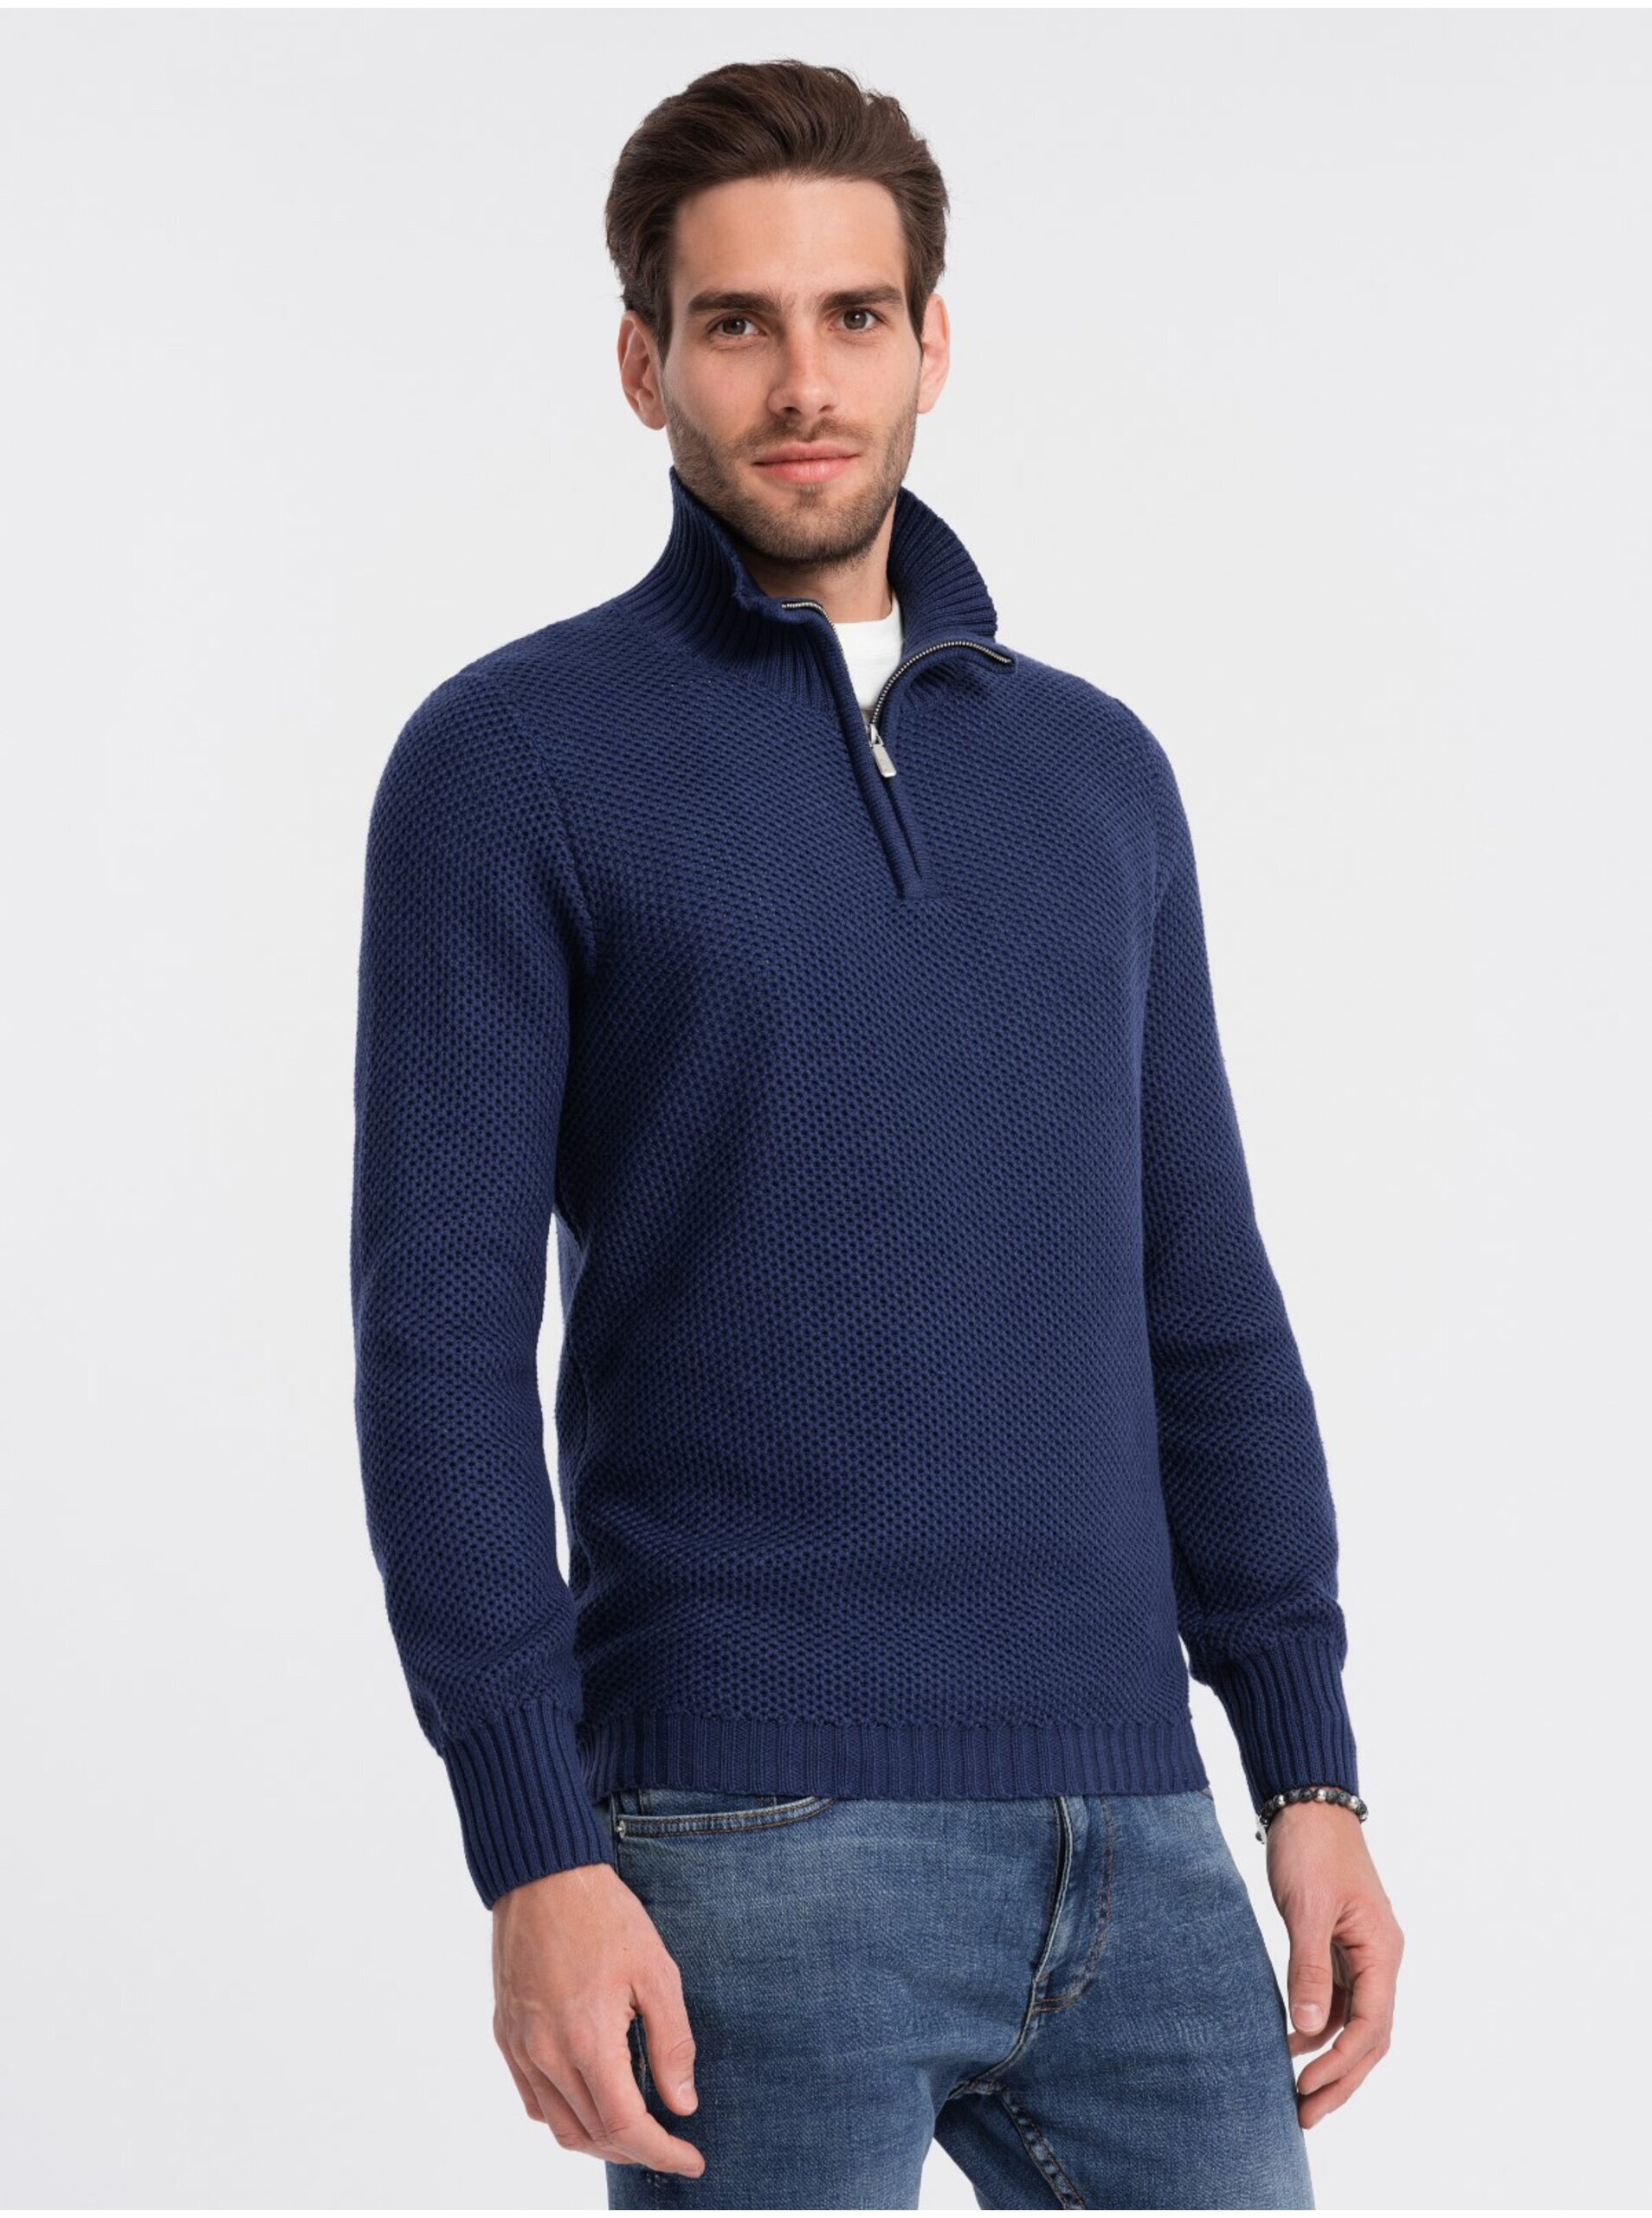 Lacno Tmavomodrý pánsky sveter s golierom Ombre Clothing